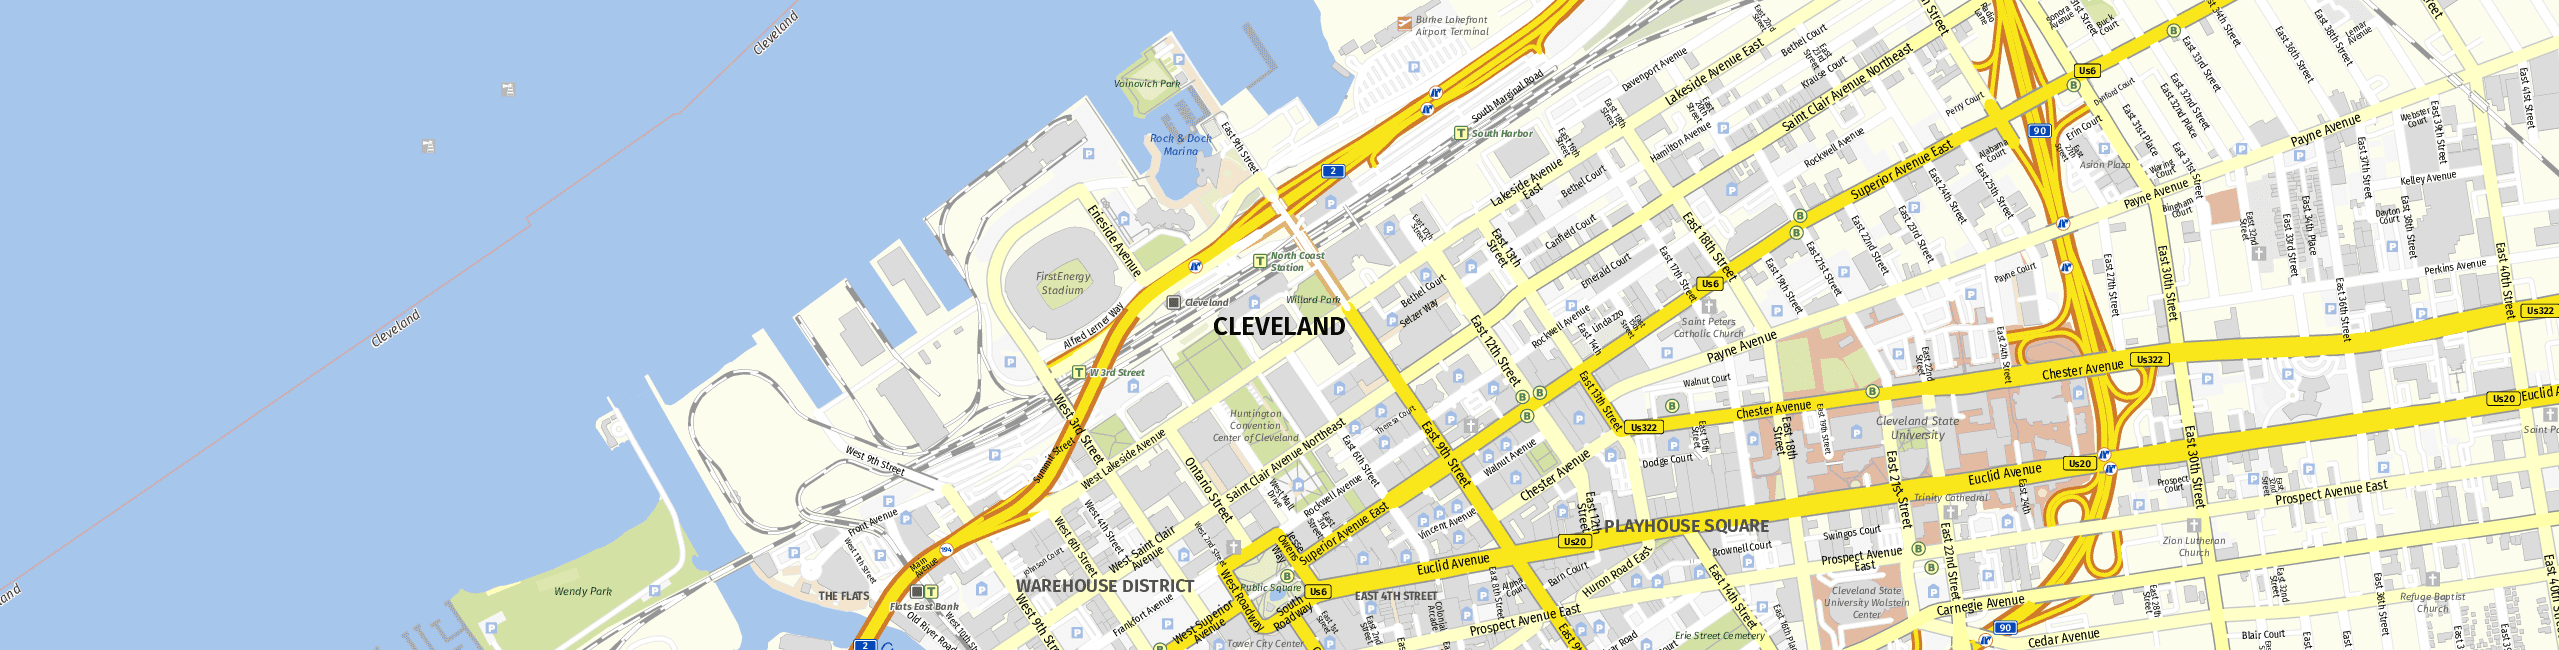 Stadtplan Cleveland zum Downloaden.